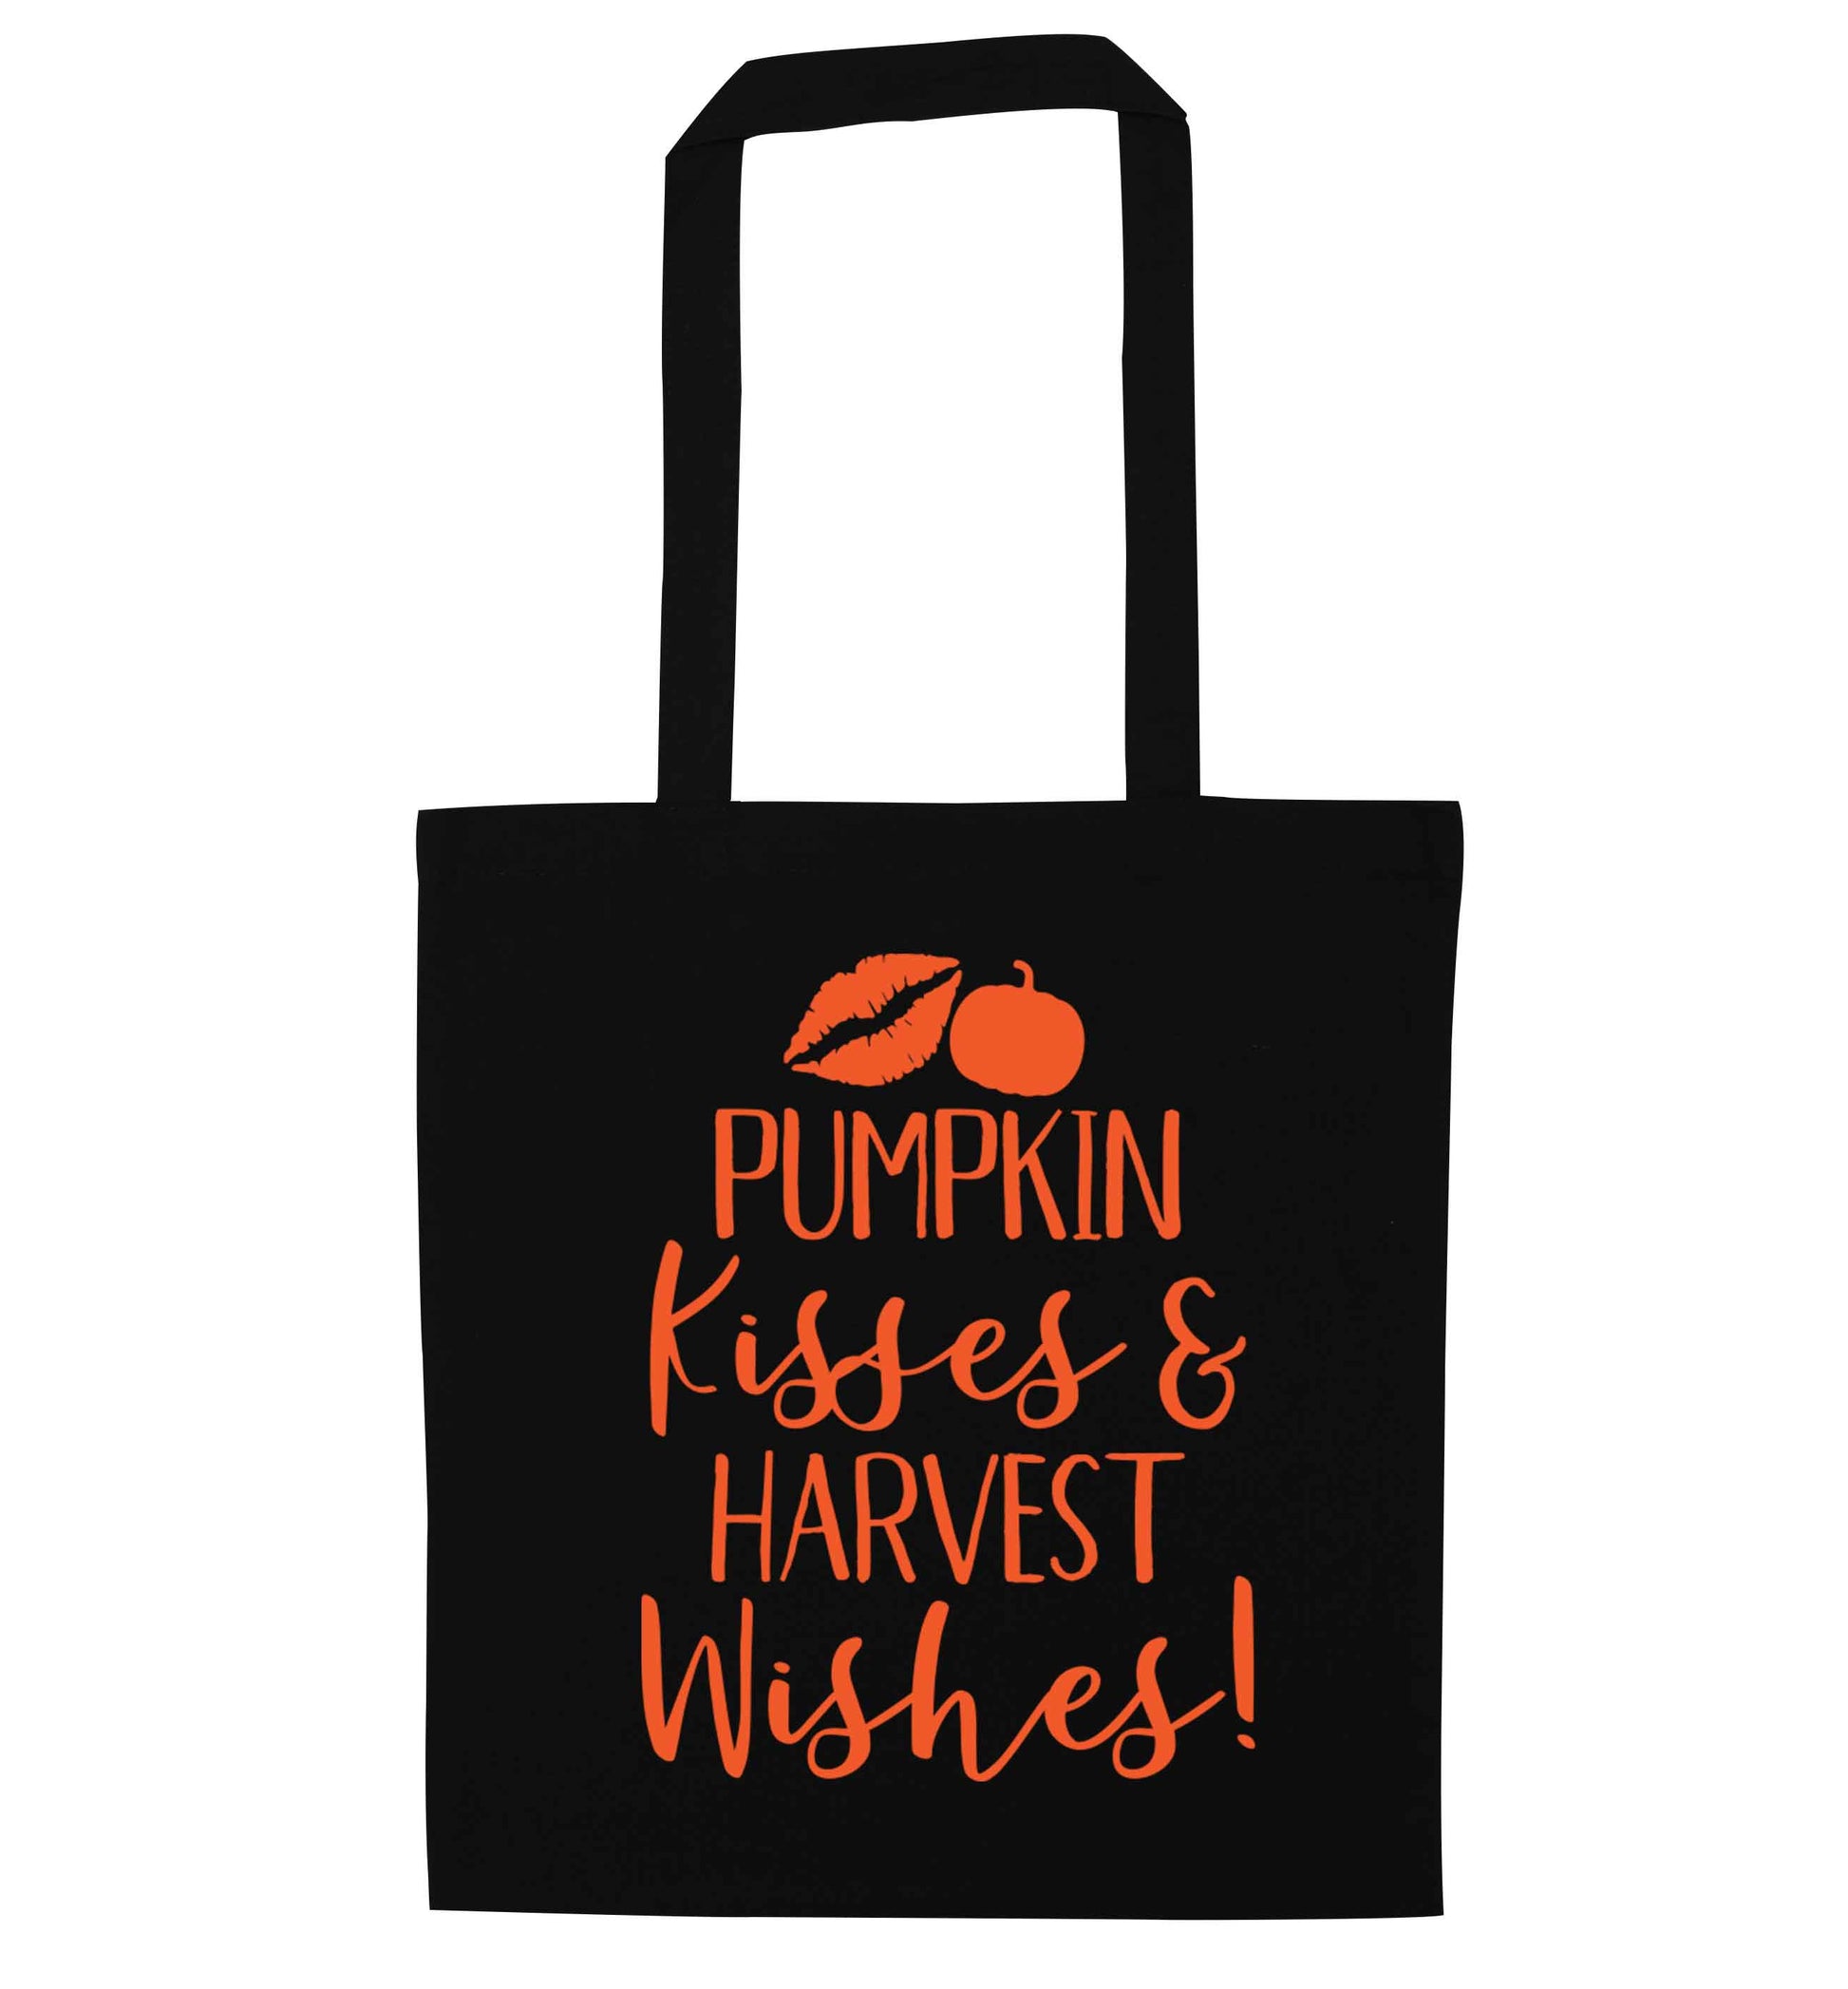 Pumpkin Kisses Harvest black tote bag